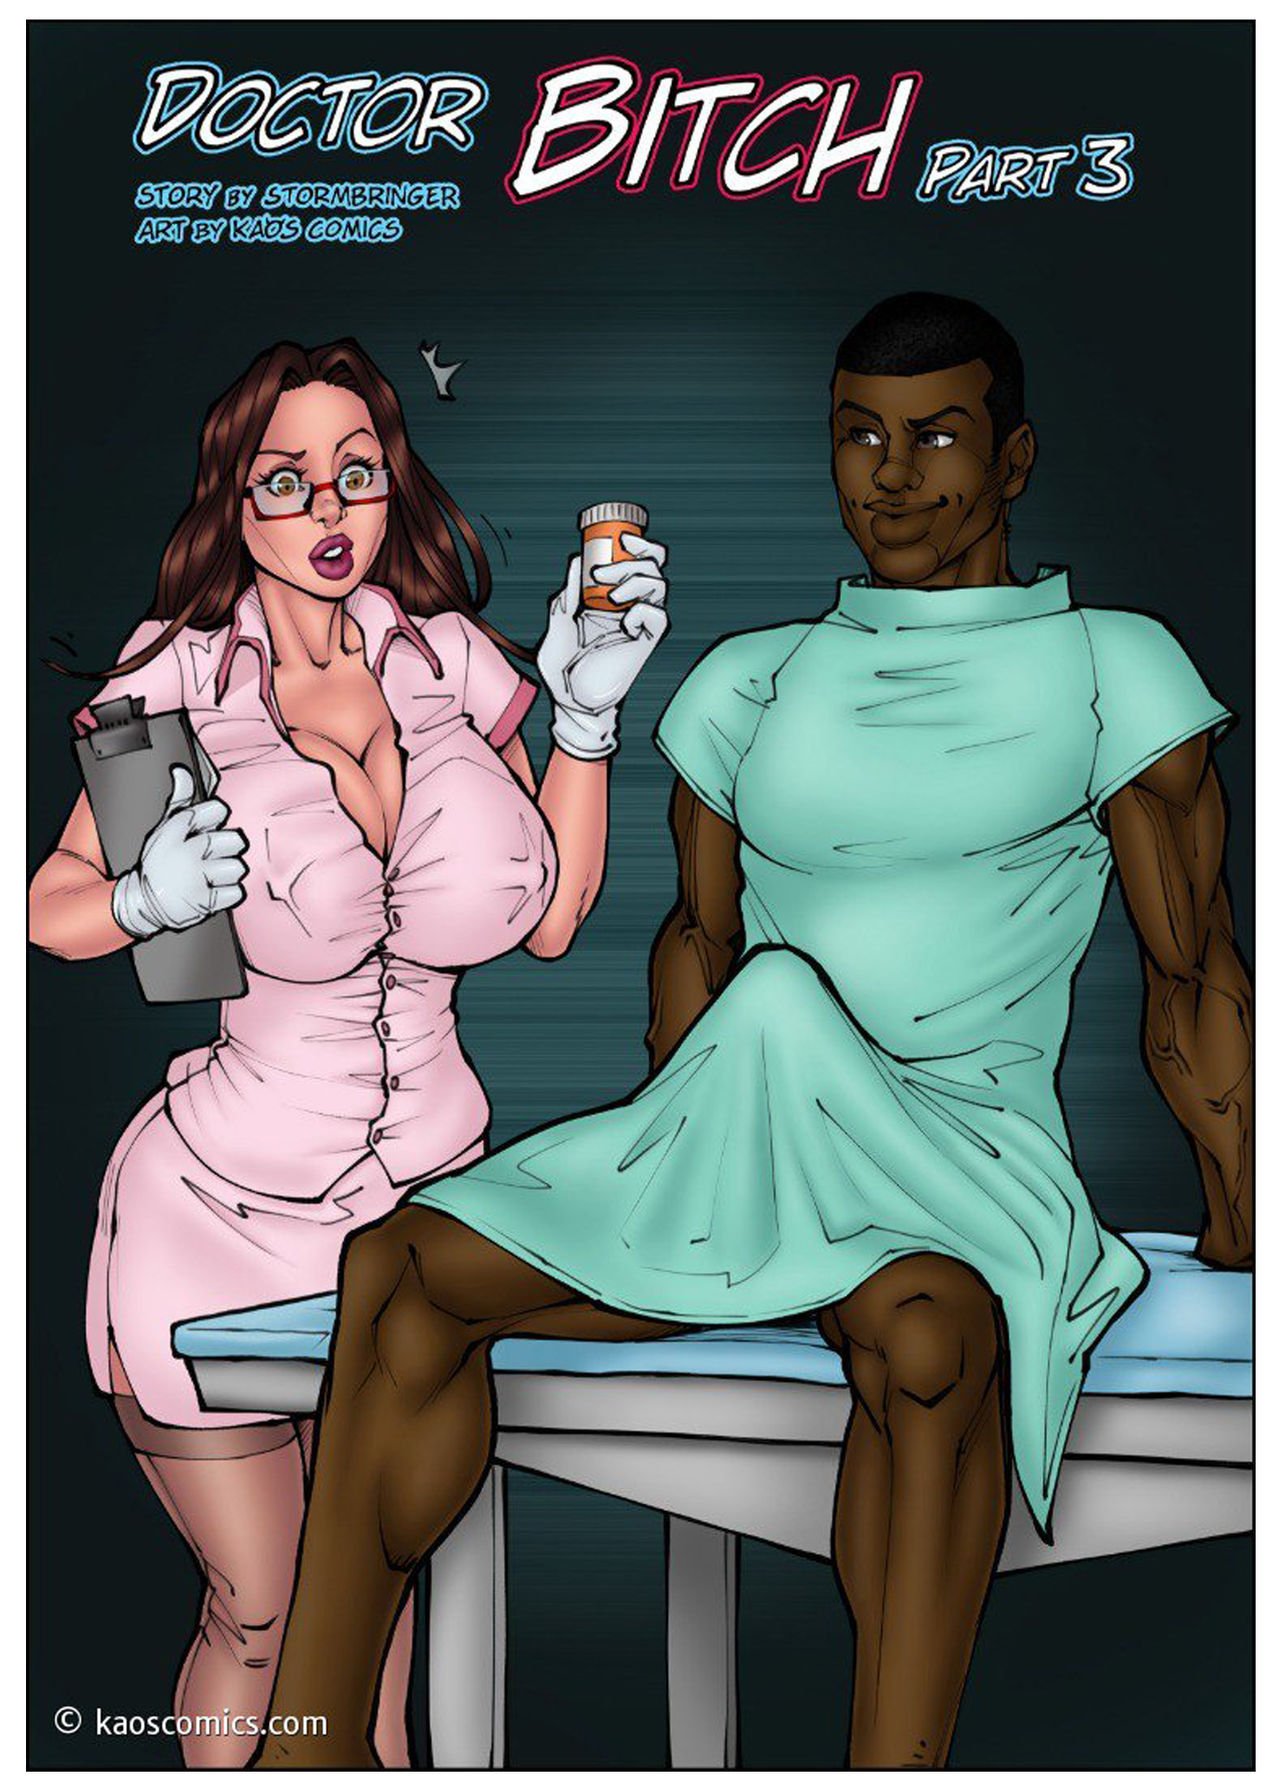 Doctor Bitch 3 (FULL) - Kaos Comics hq nude photo